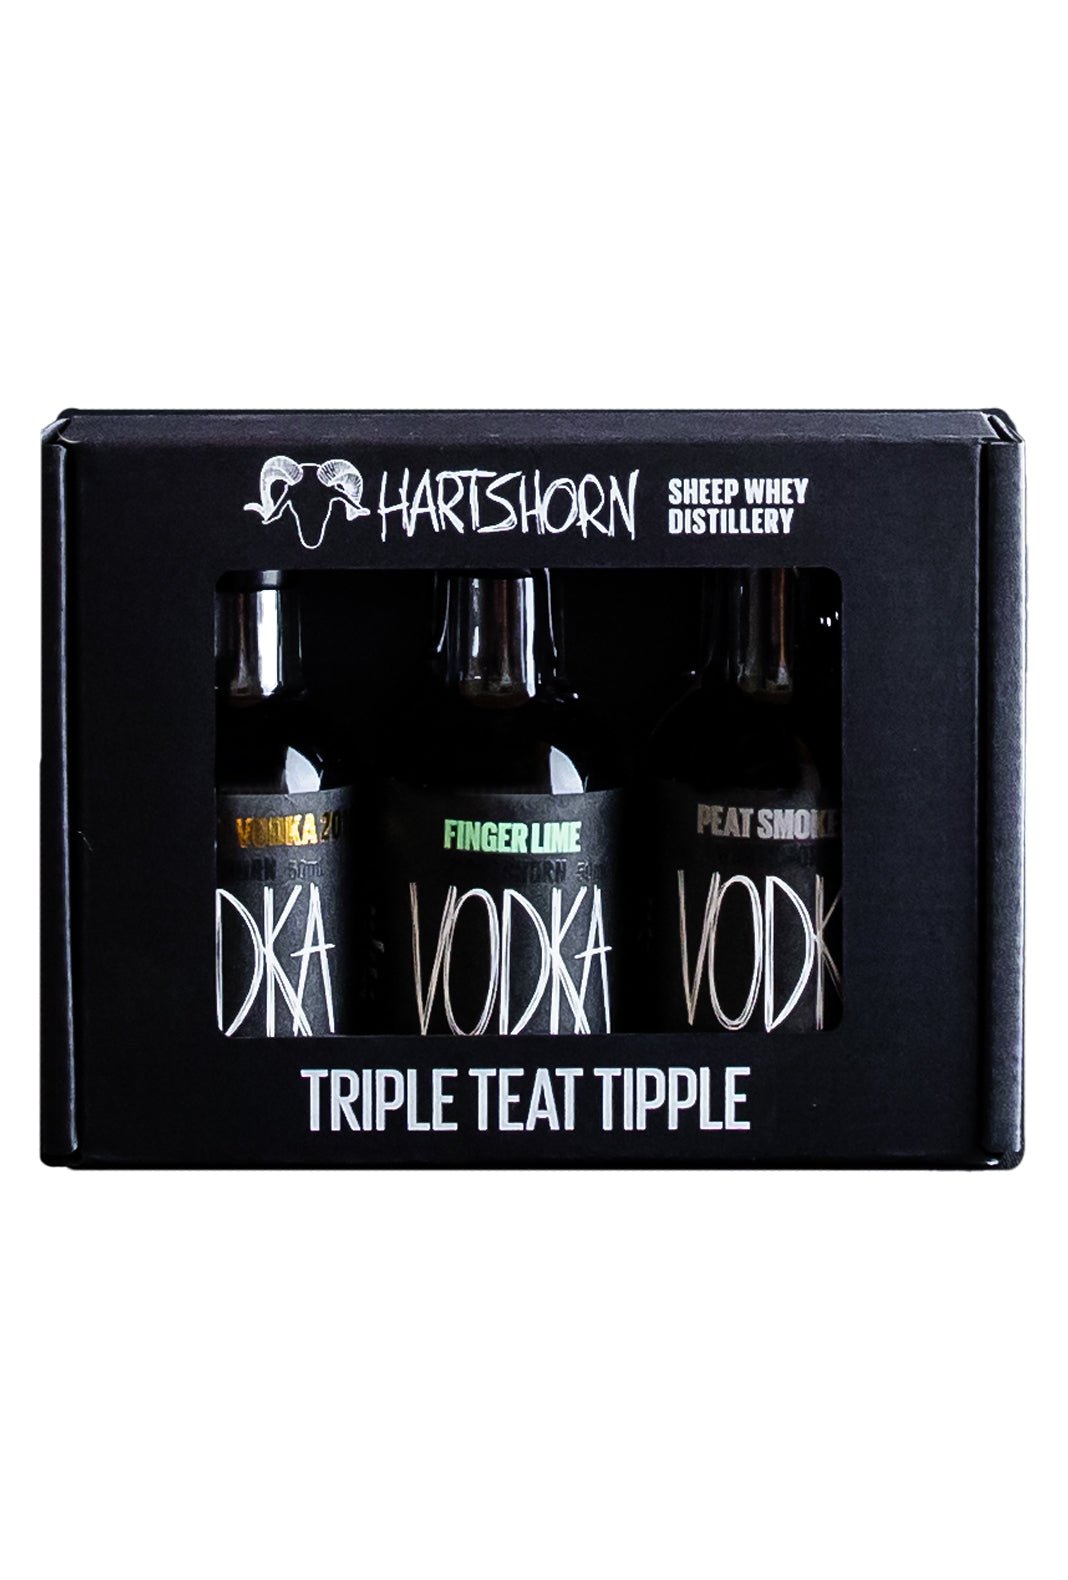 Hartshorn Trio Original, Finger Lime, Peated vodka 50ml - Vodka - Liquor Wine Cave